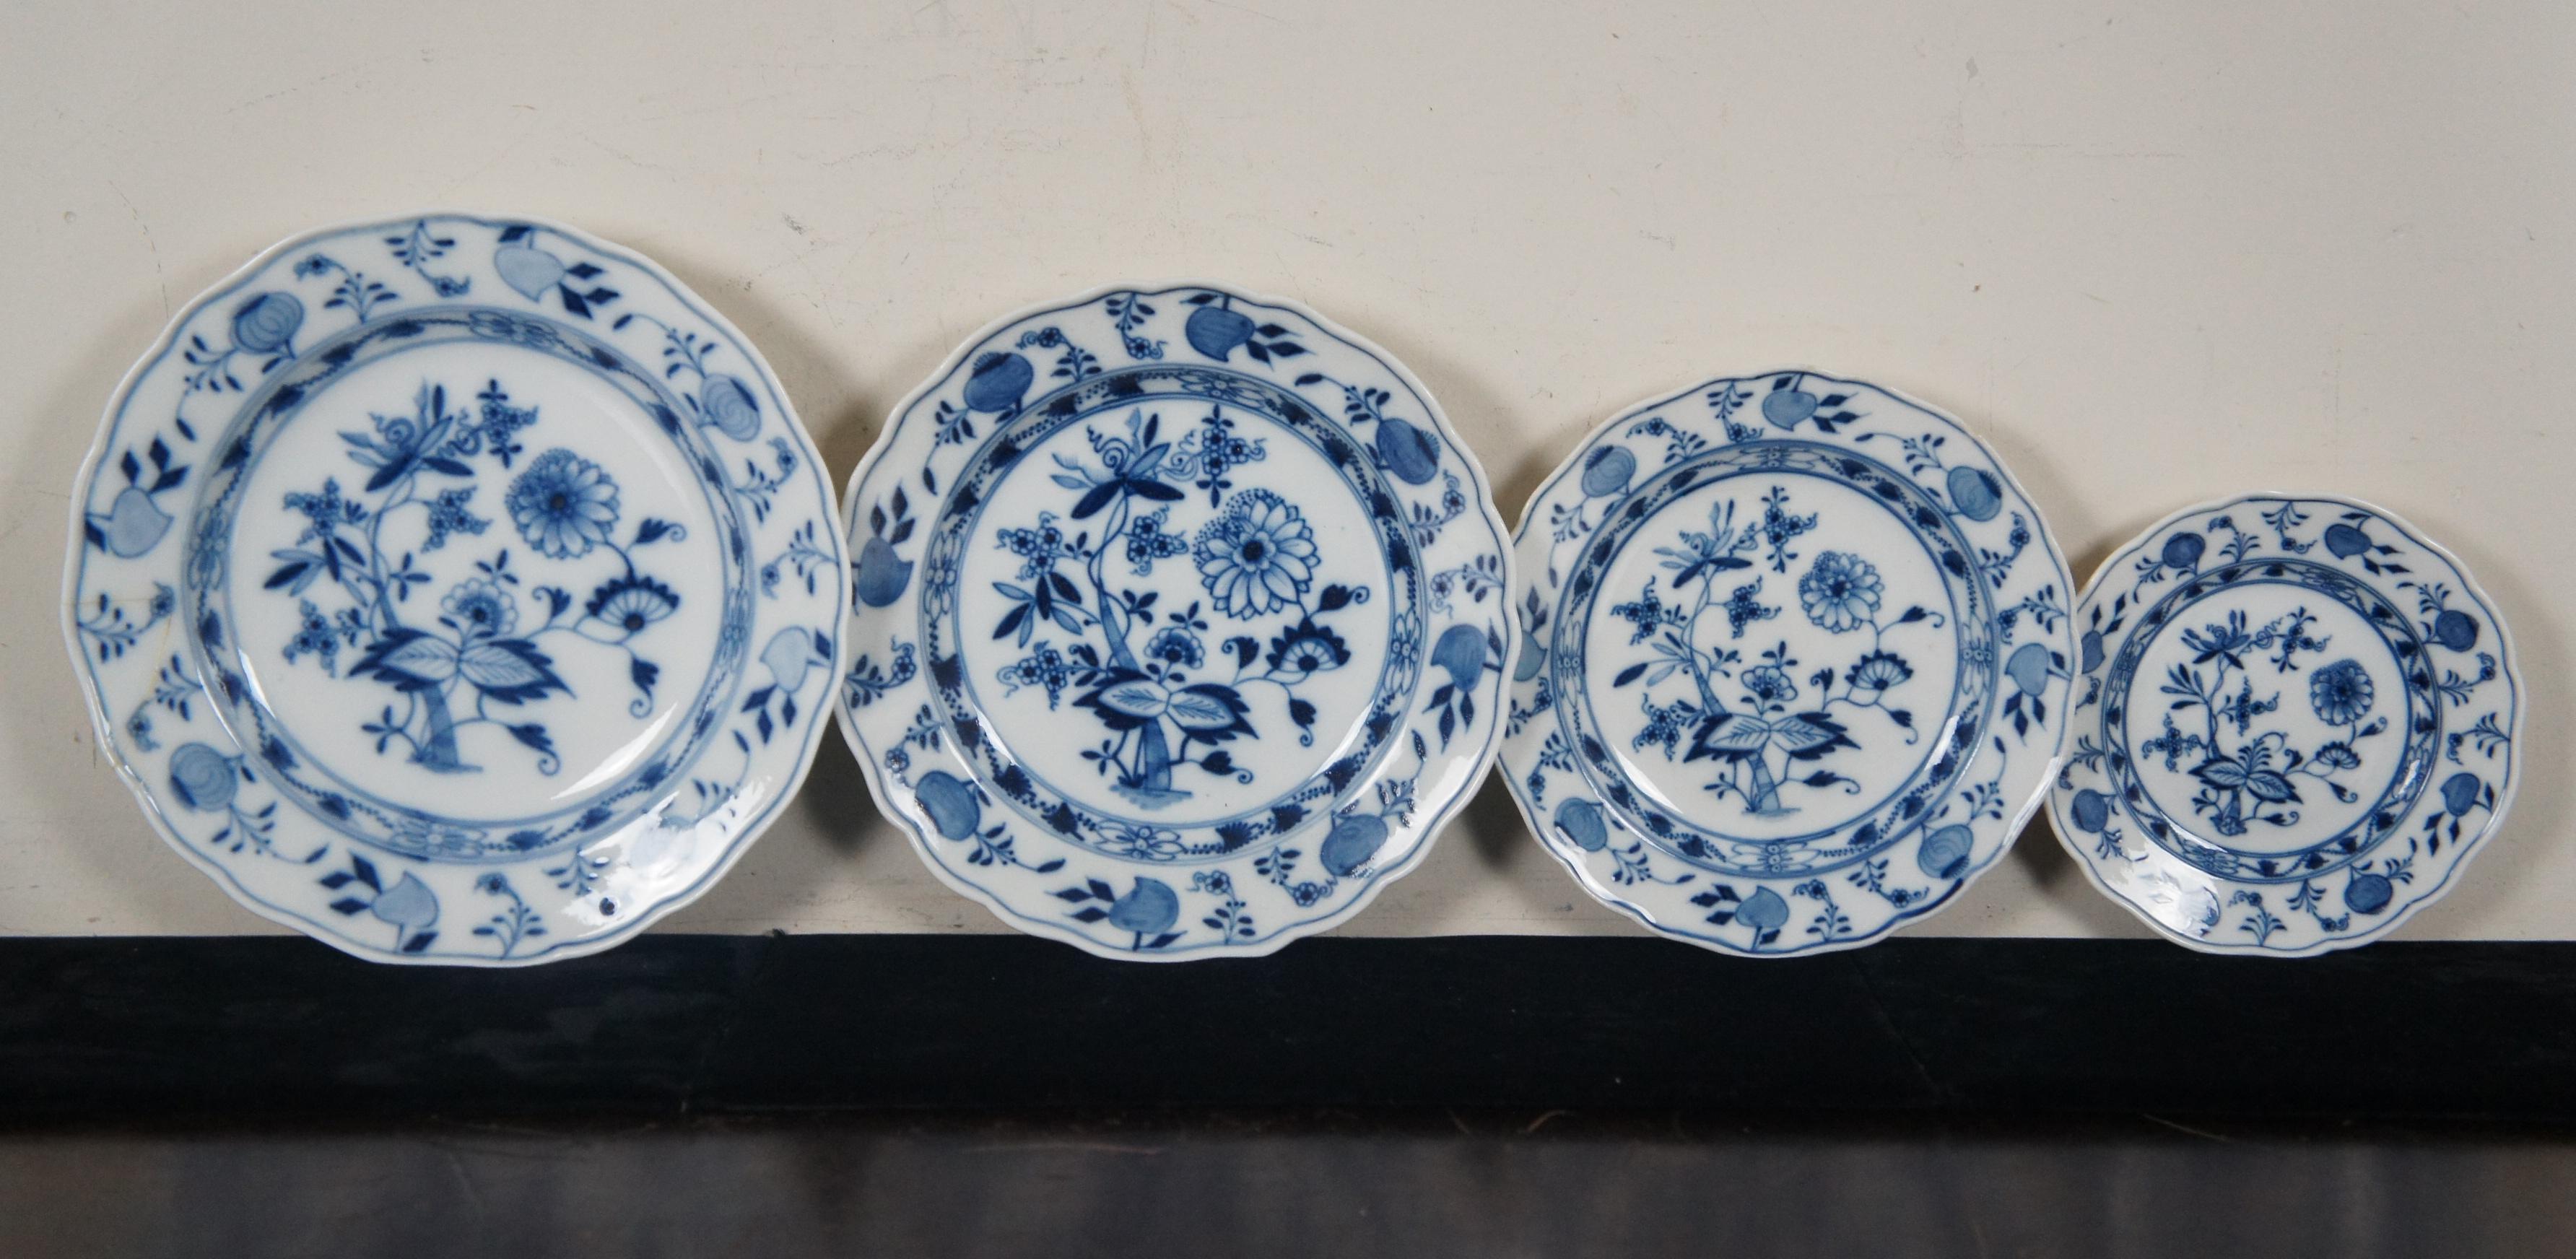 19th Century 36 Pc Antique Meissen Flow Blue Onion China Set X Sword Mark Germany Platters